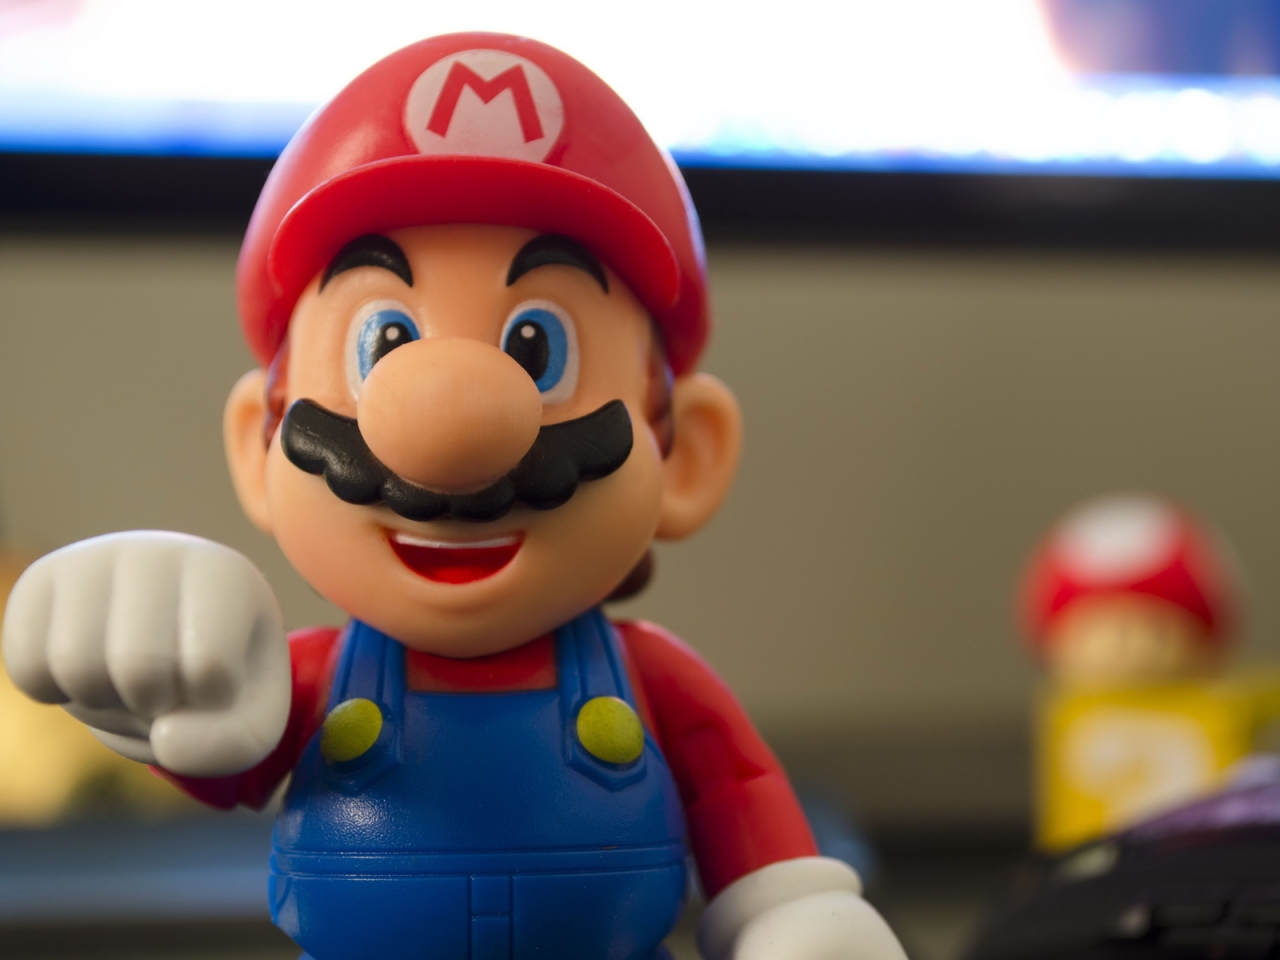 Super Mario Figurine for 1280 x 960 resolution